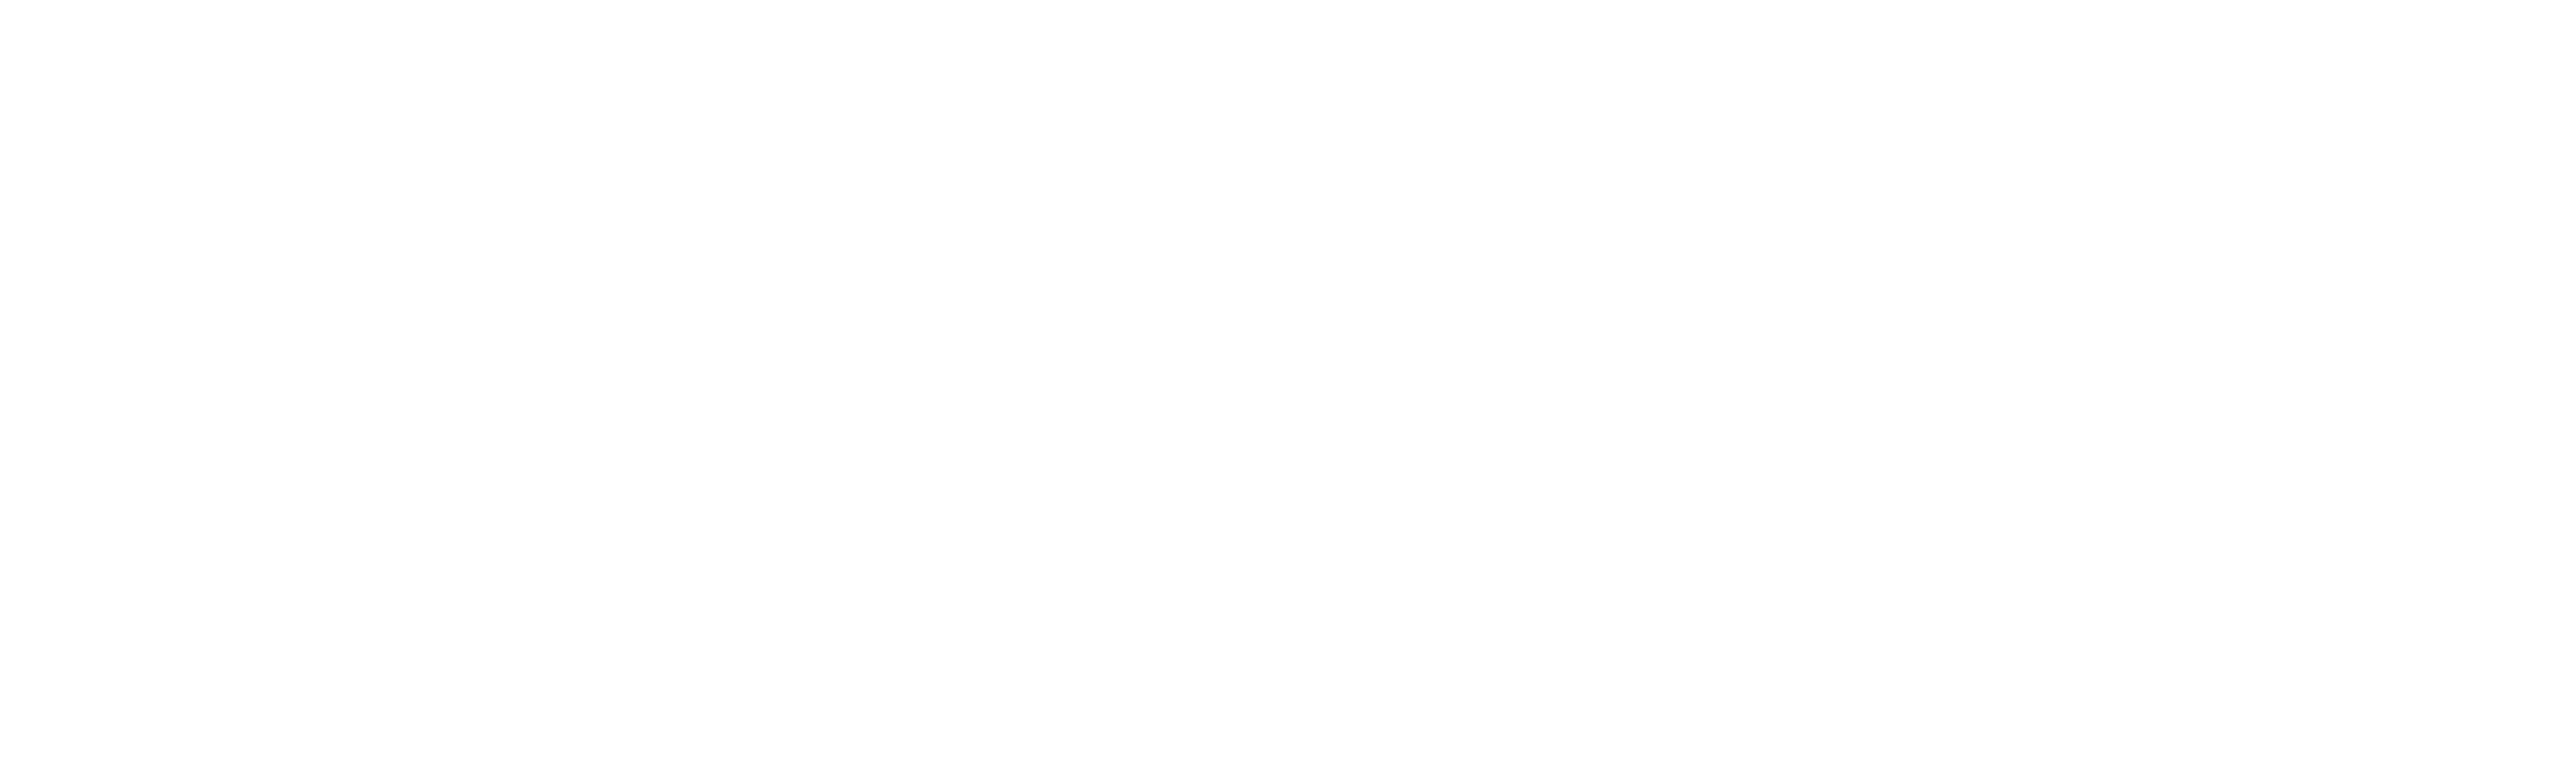 Castle Lane Catering